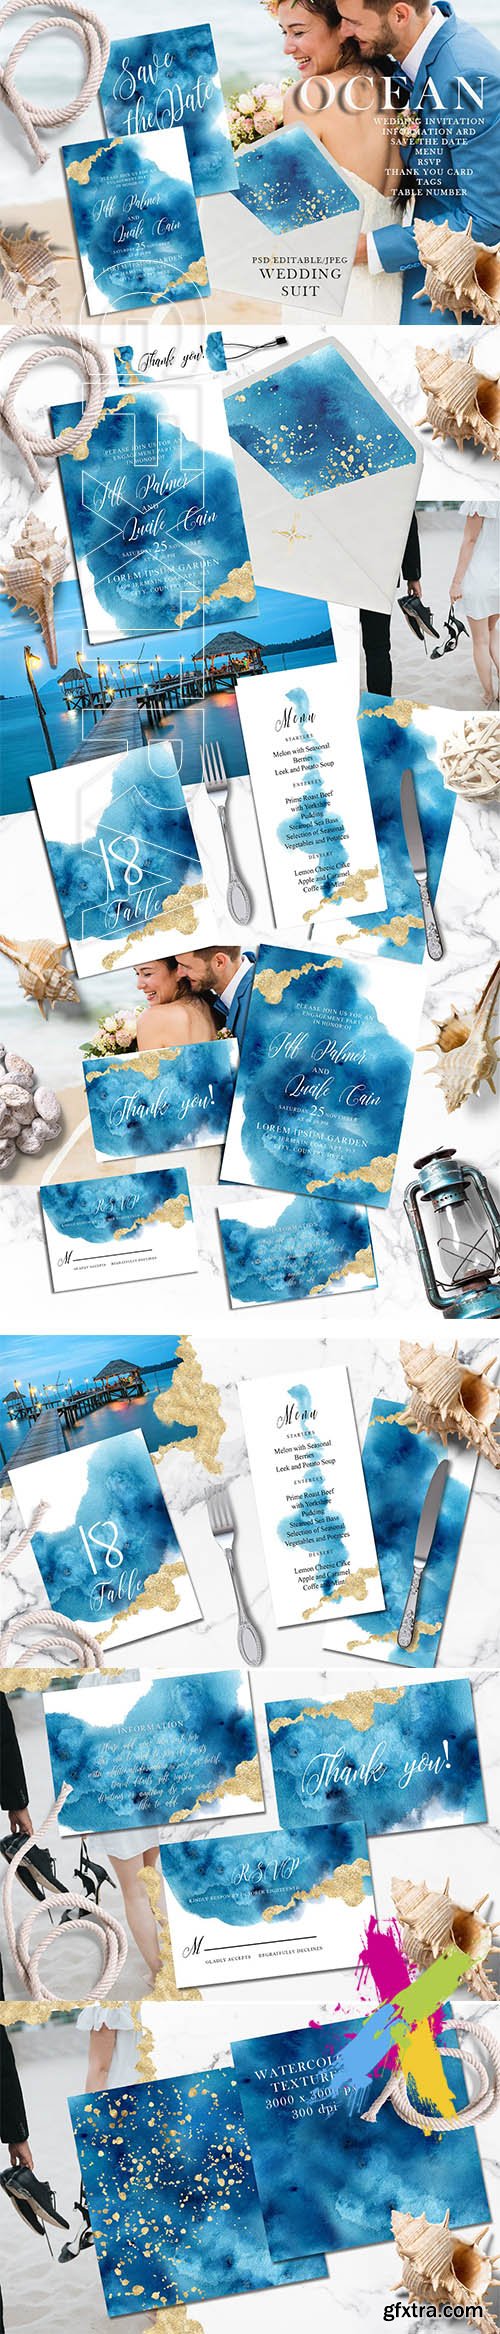 CreativeMarket - Ocean wedding invitations suit 3557254